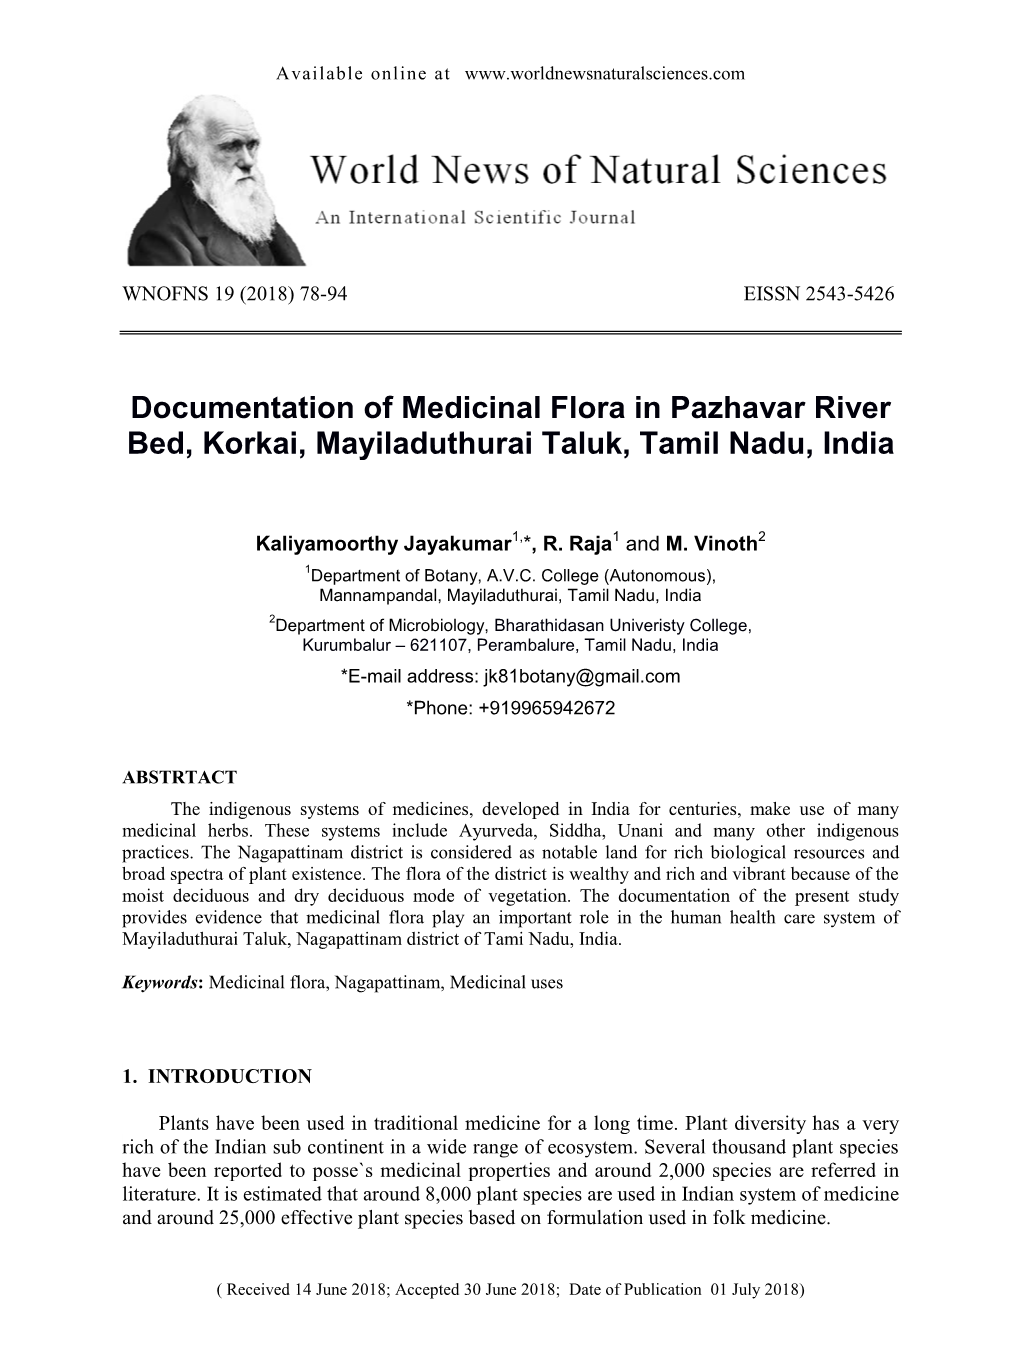 Documentation of Medicinal Flora in Pazhavar River Bed, Korkai, Mayiladuthurai Taluk, Tamil Nadu, India